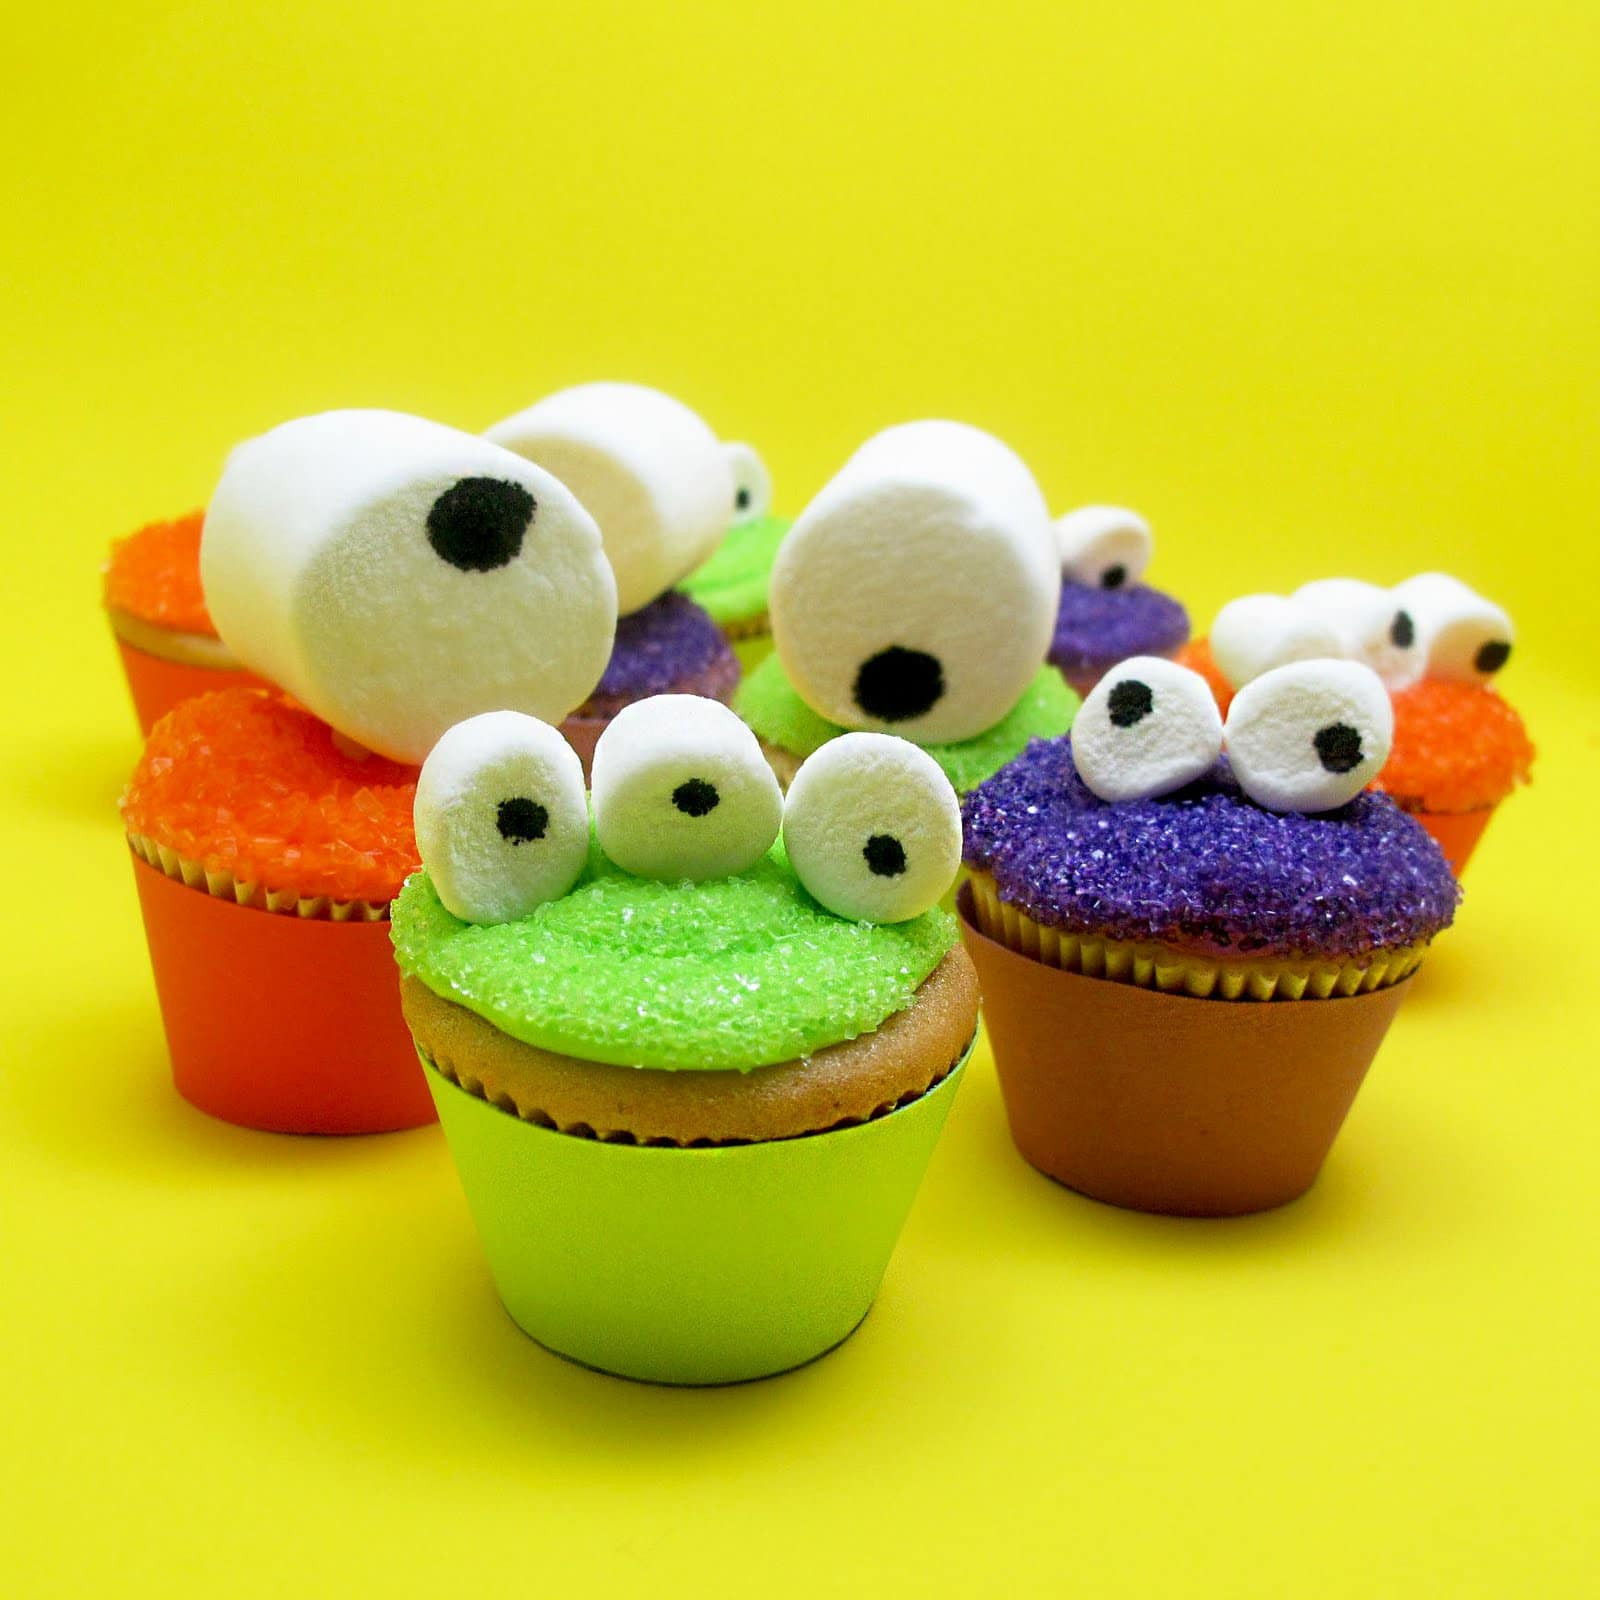 Halloween Mini Cupcakes
 mini monster cupcakes for an easy Halloween treat idea